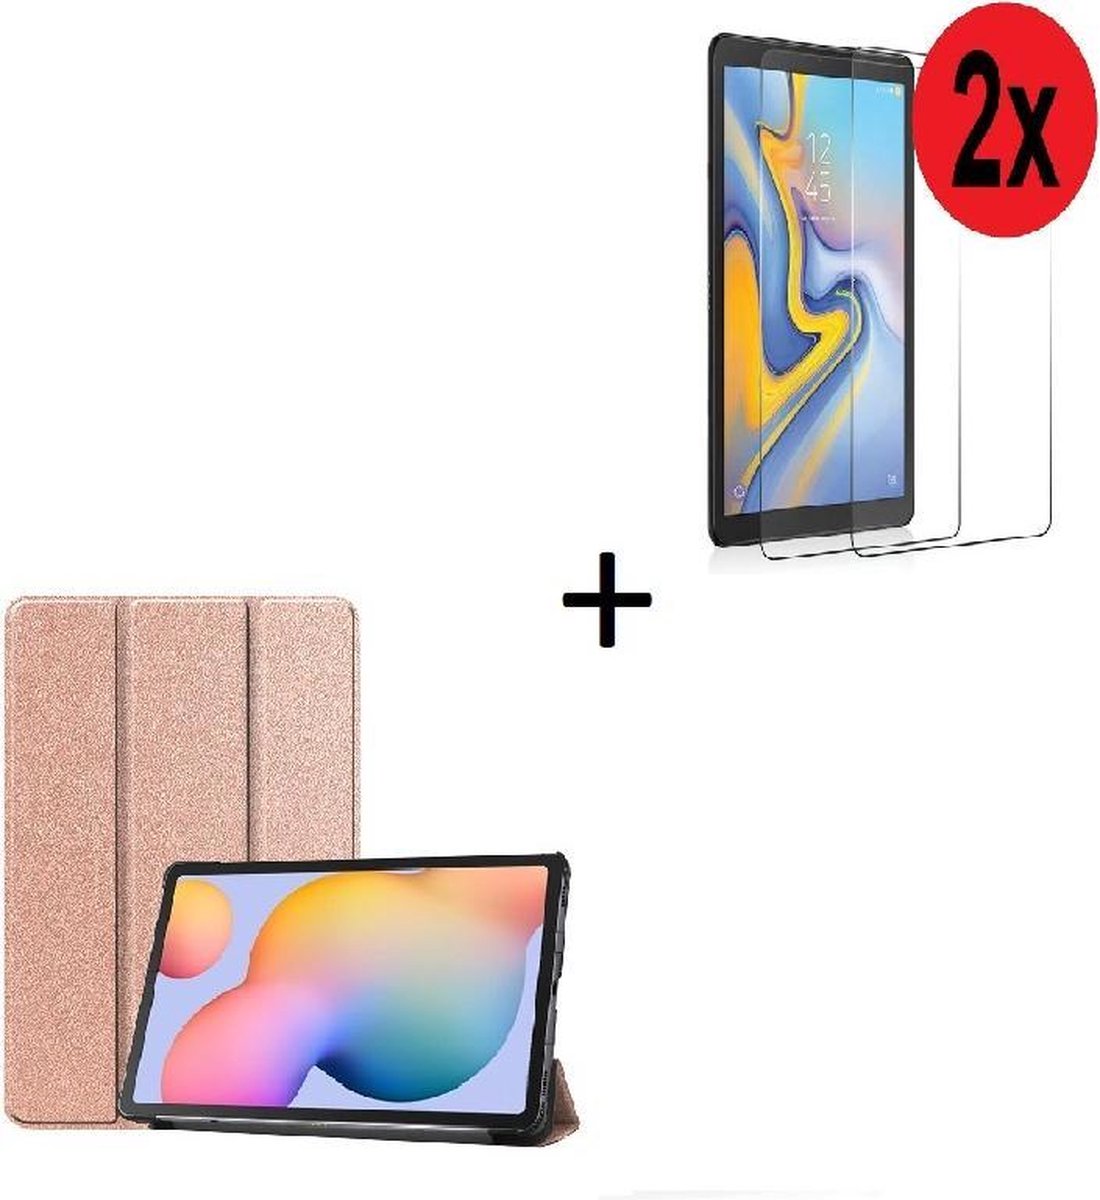 Geschikt voor Samsung Galaxy Tab S6 Lite (P610) hoes Tri fold book case hoesje Back Cover met stand Rose Goud+ 2x Tempered Gehard Glas / Glazen screenprotector Pearlycase